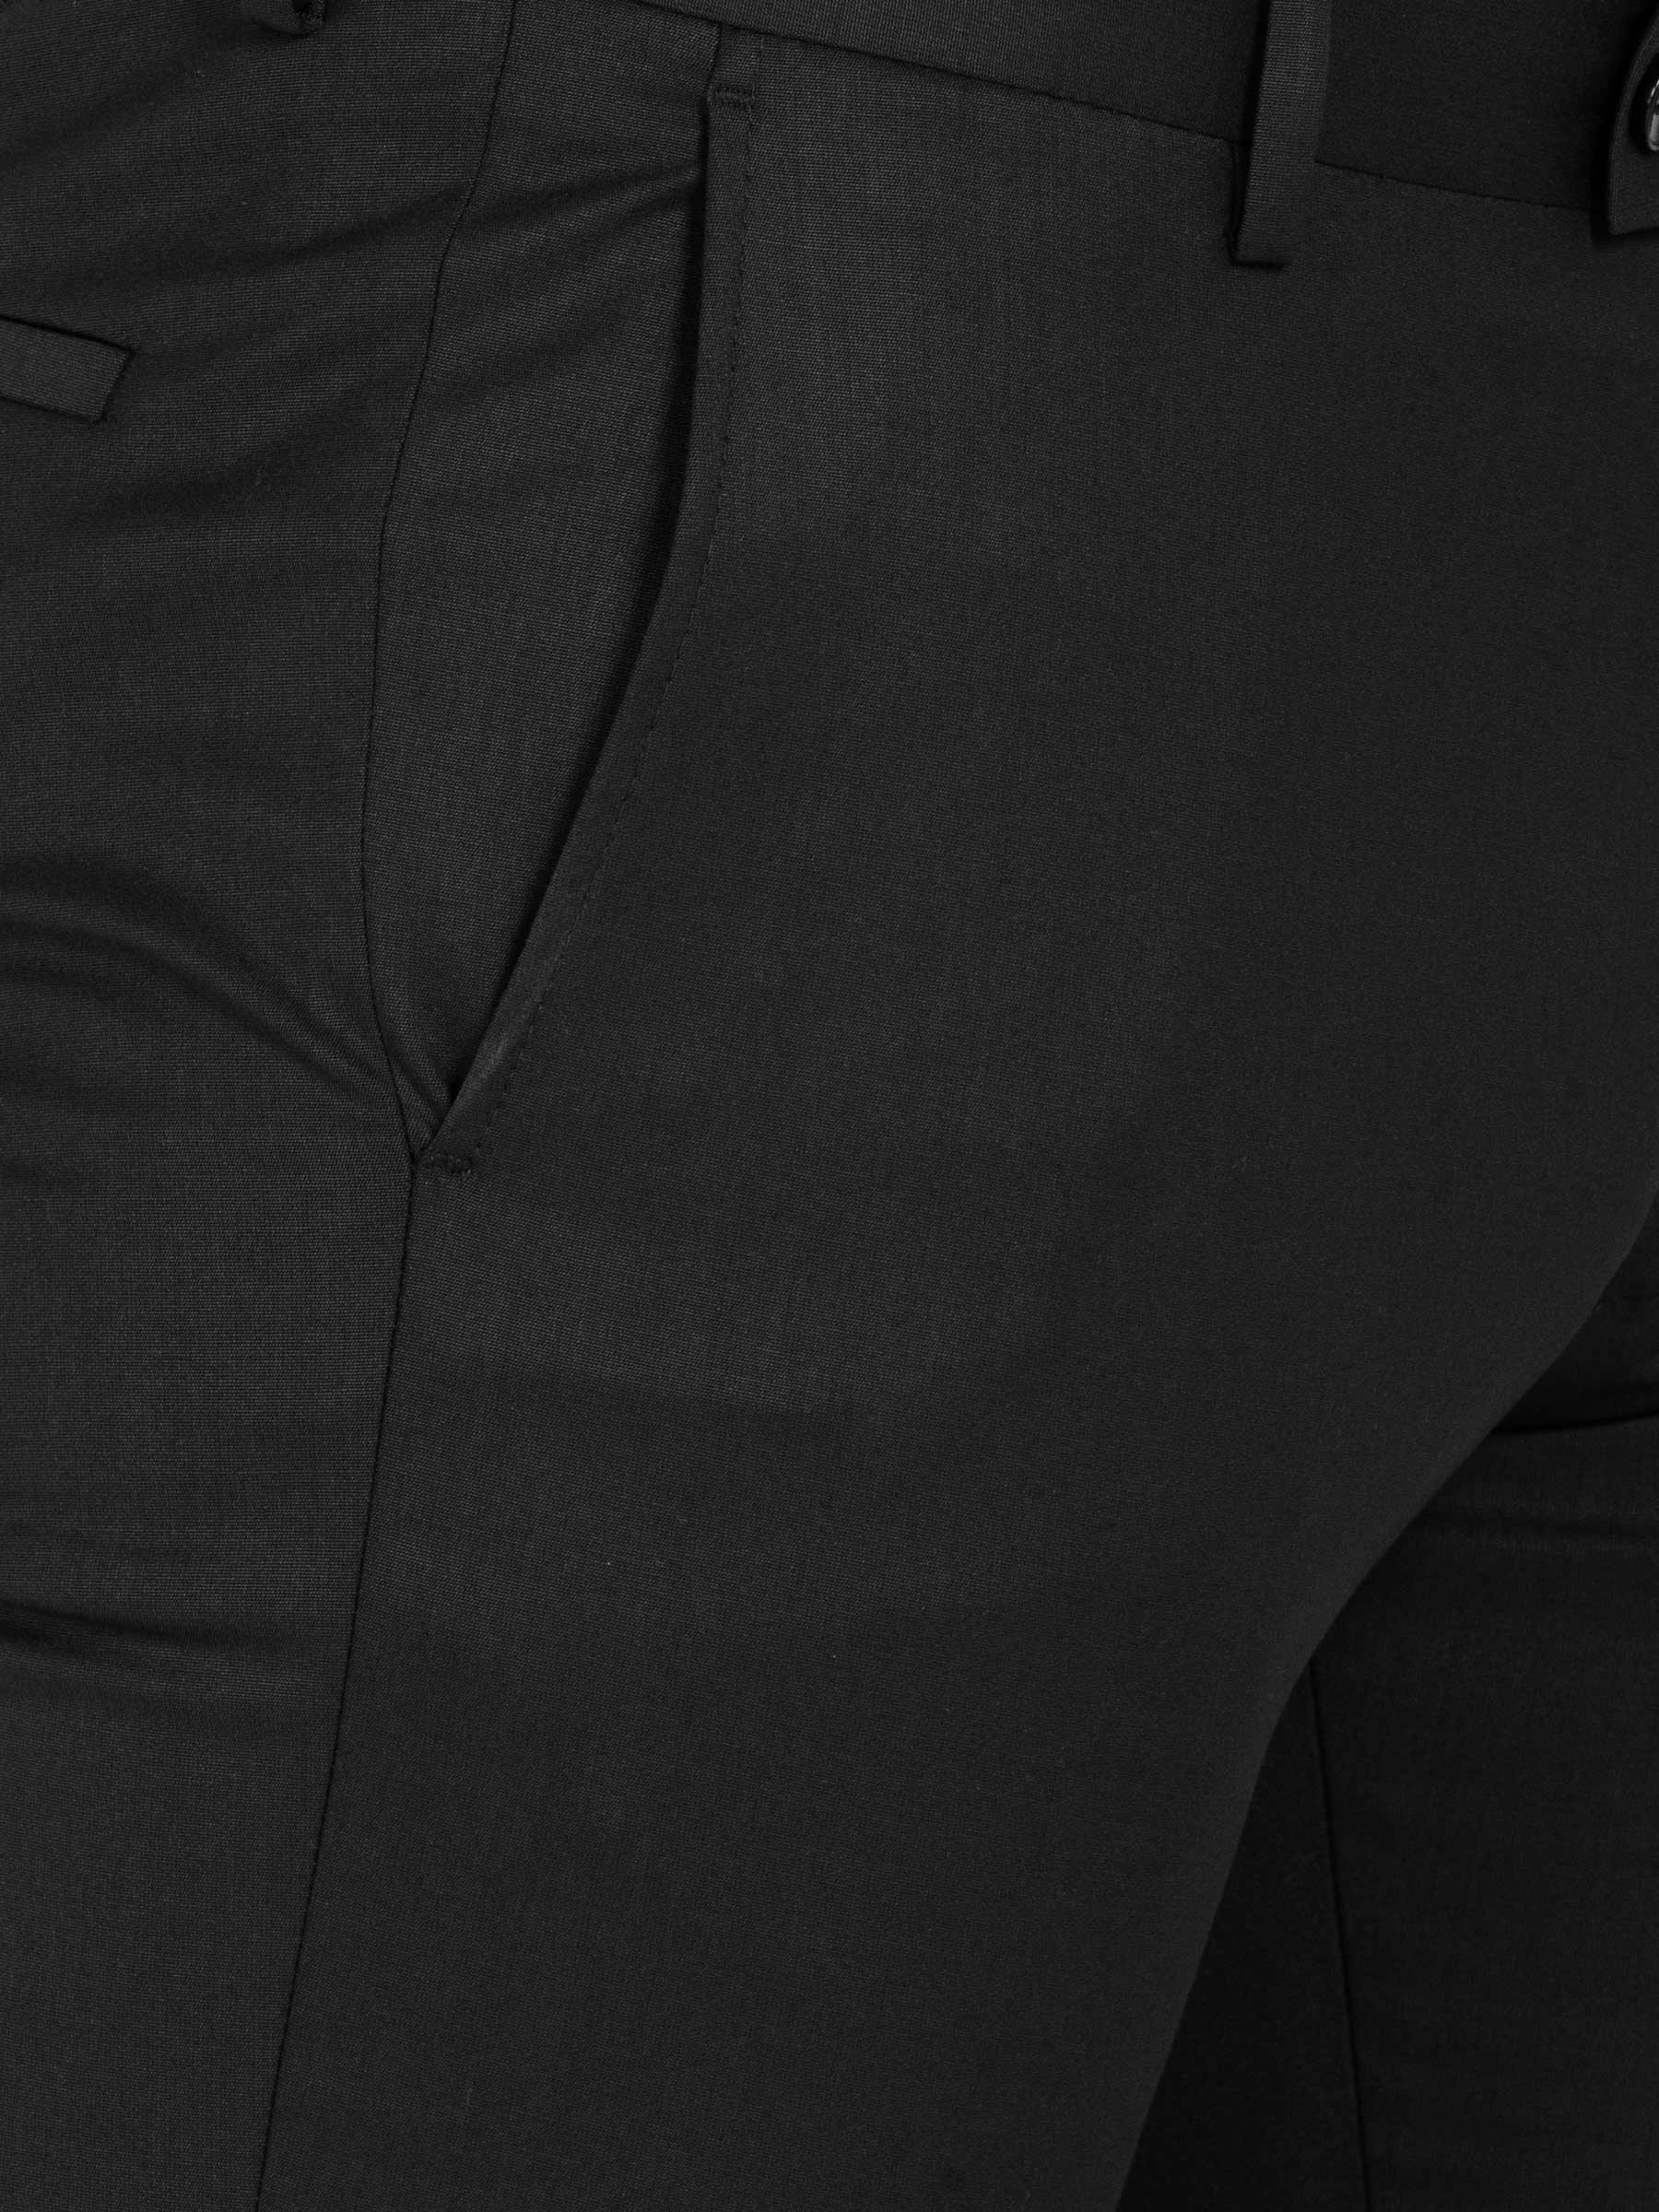 Scottsville Slim Fit Black Suit Pant 